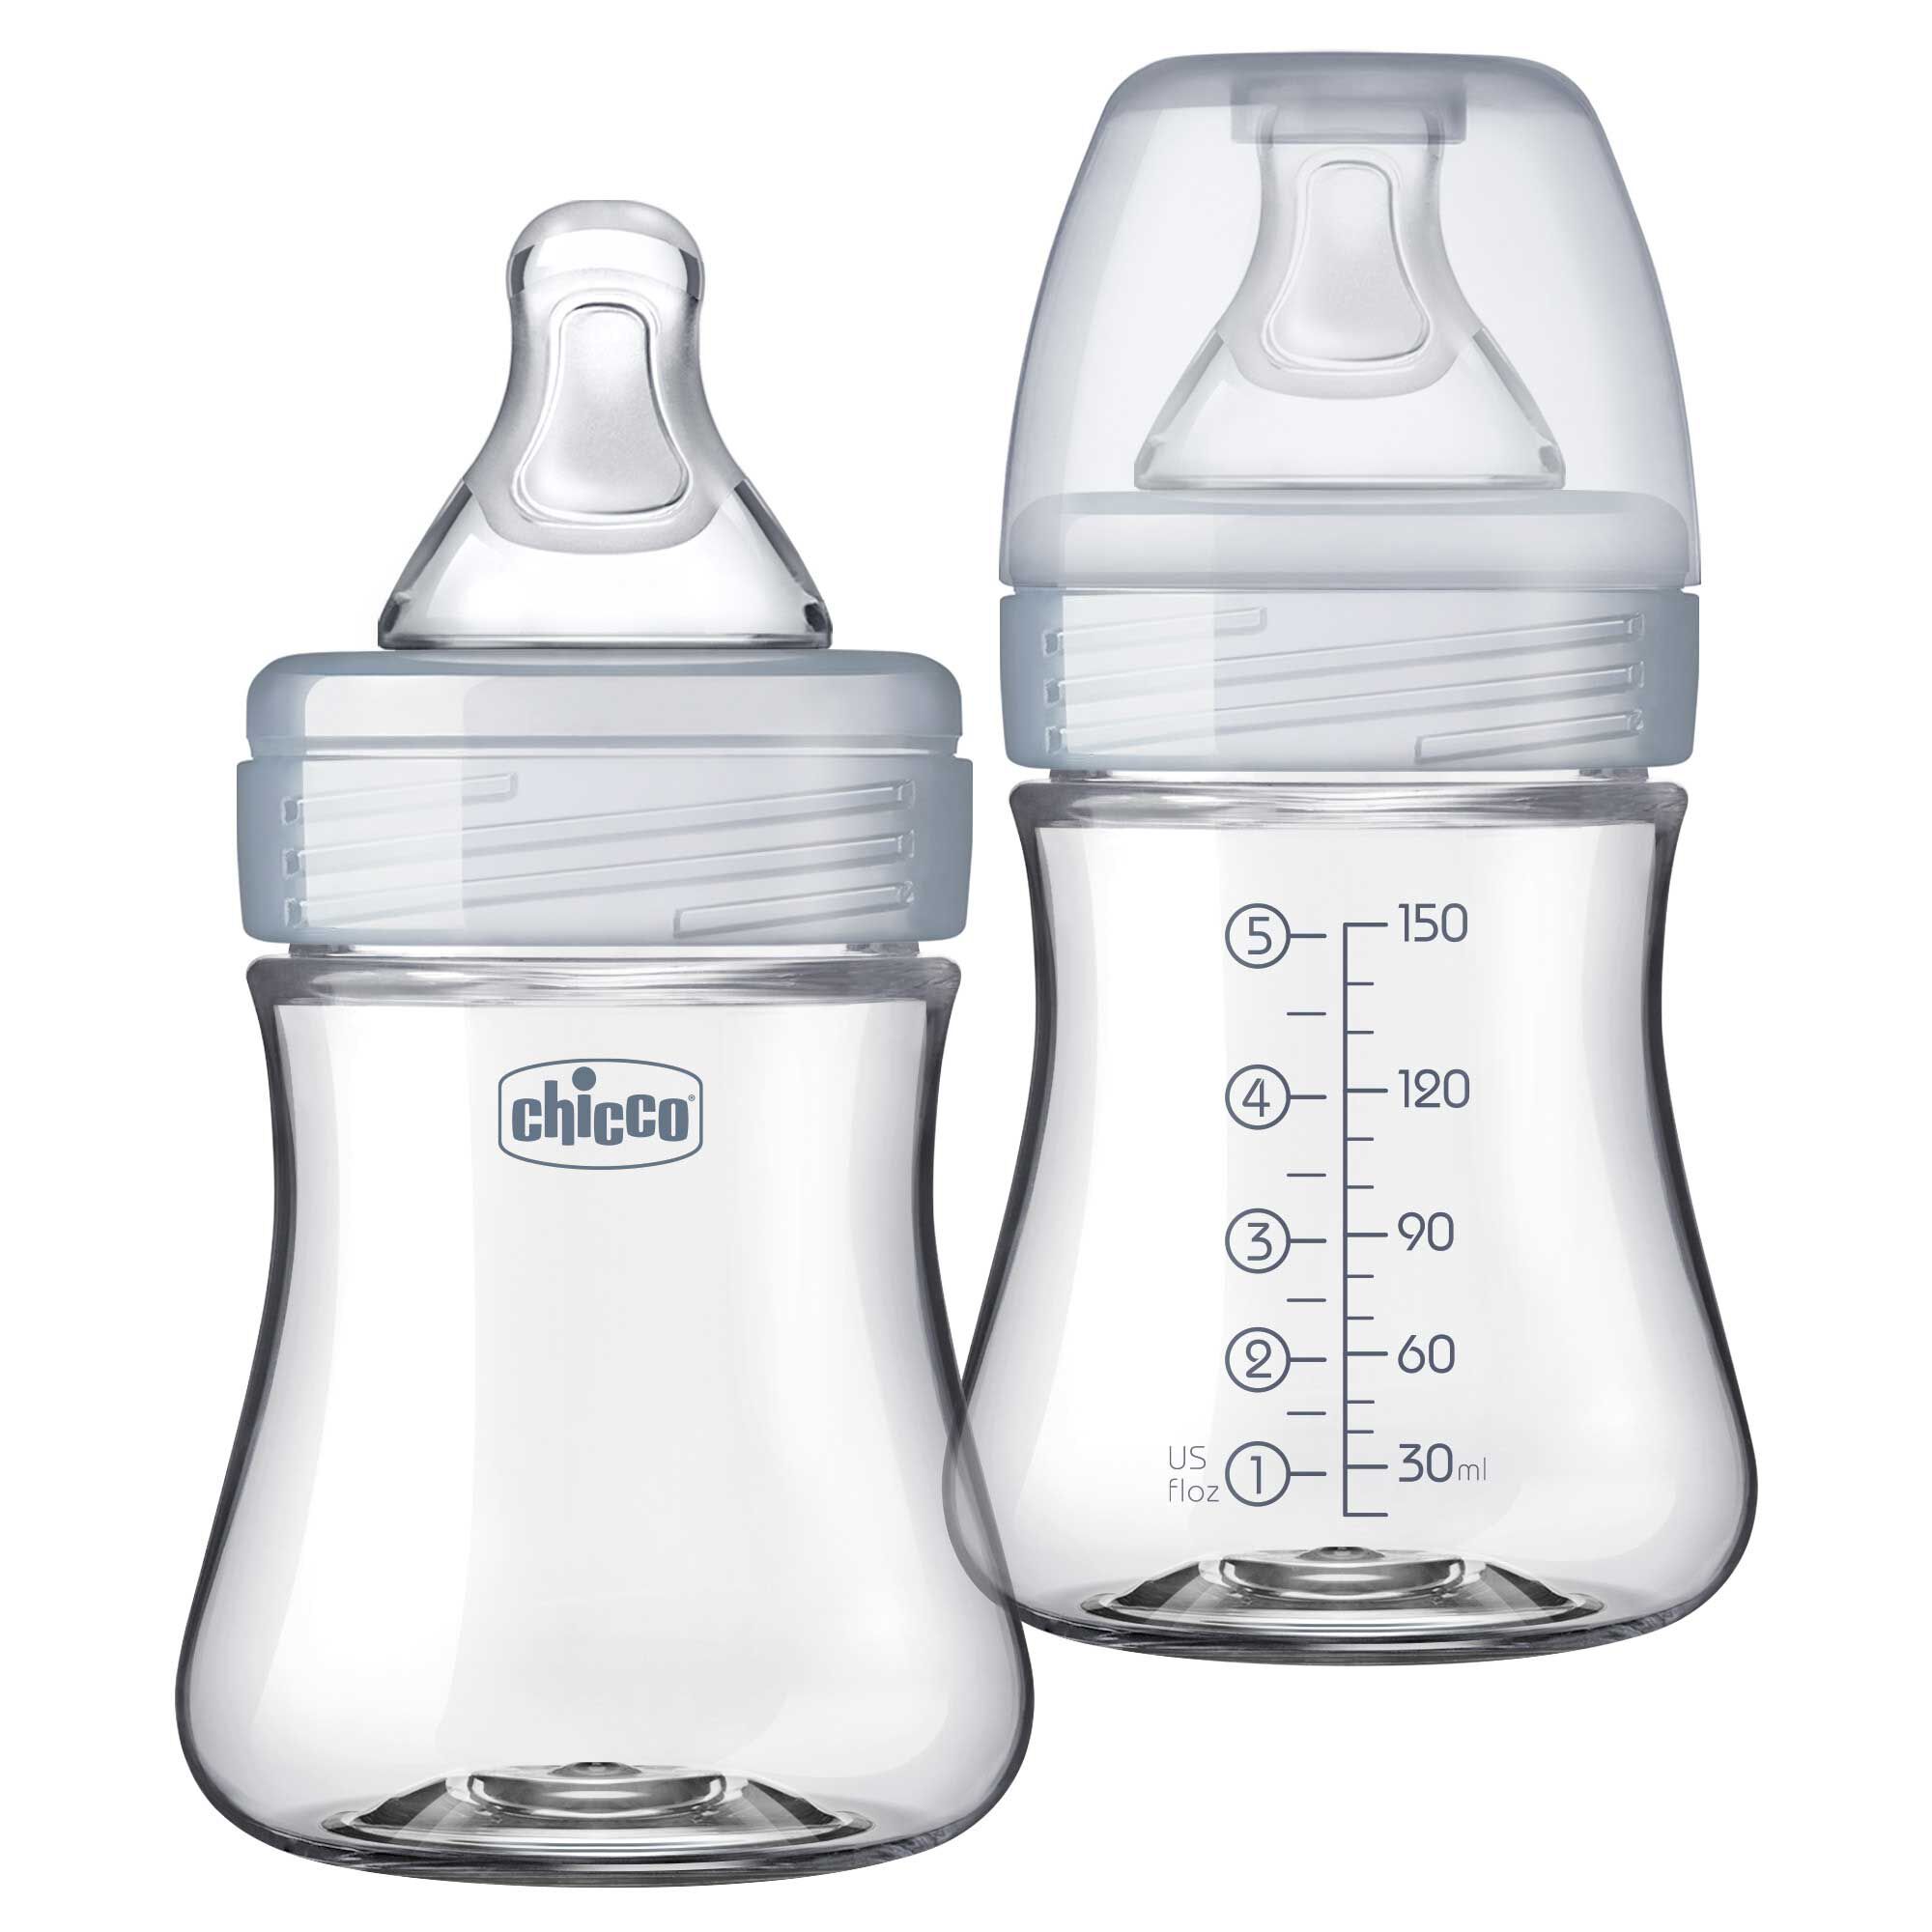 Nanobebe - 2Pk Silicone Baby Bottle 9Oz, White